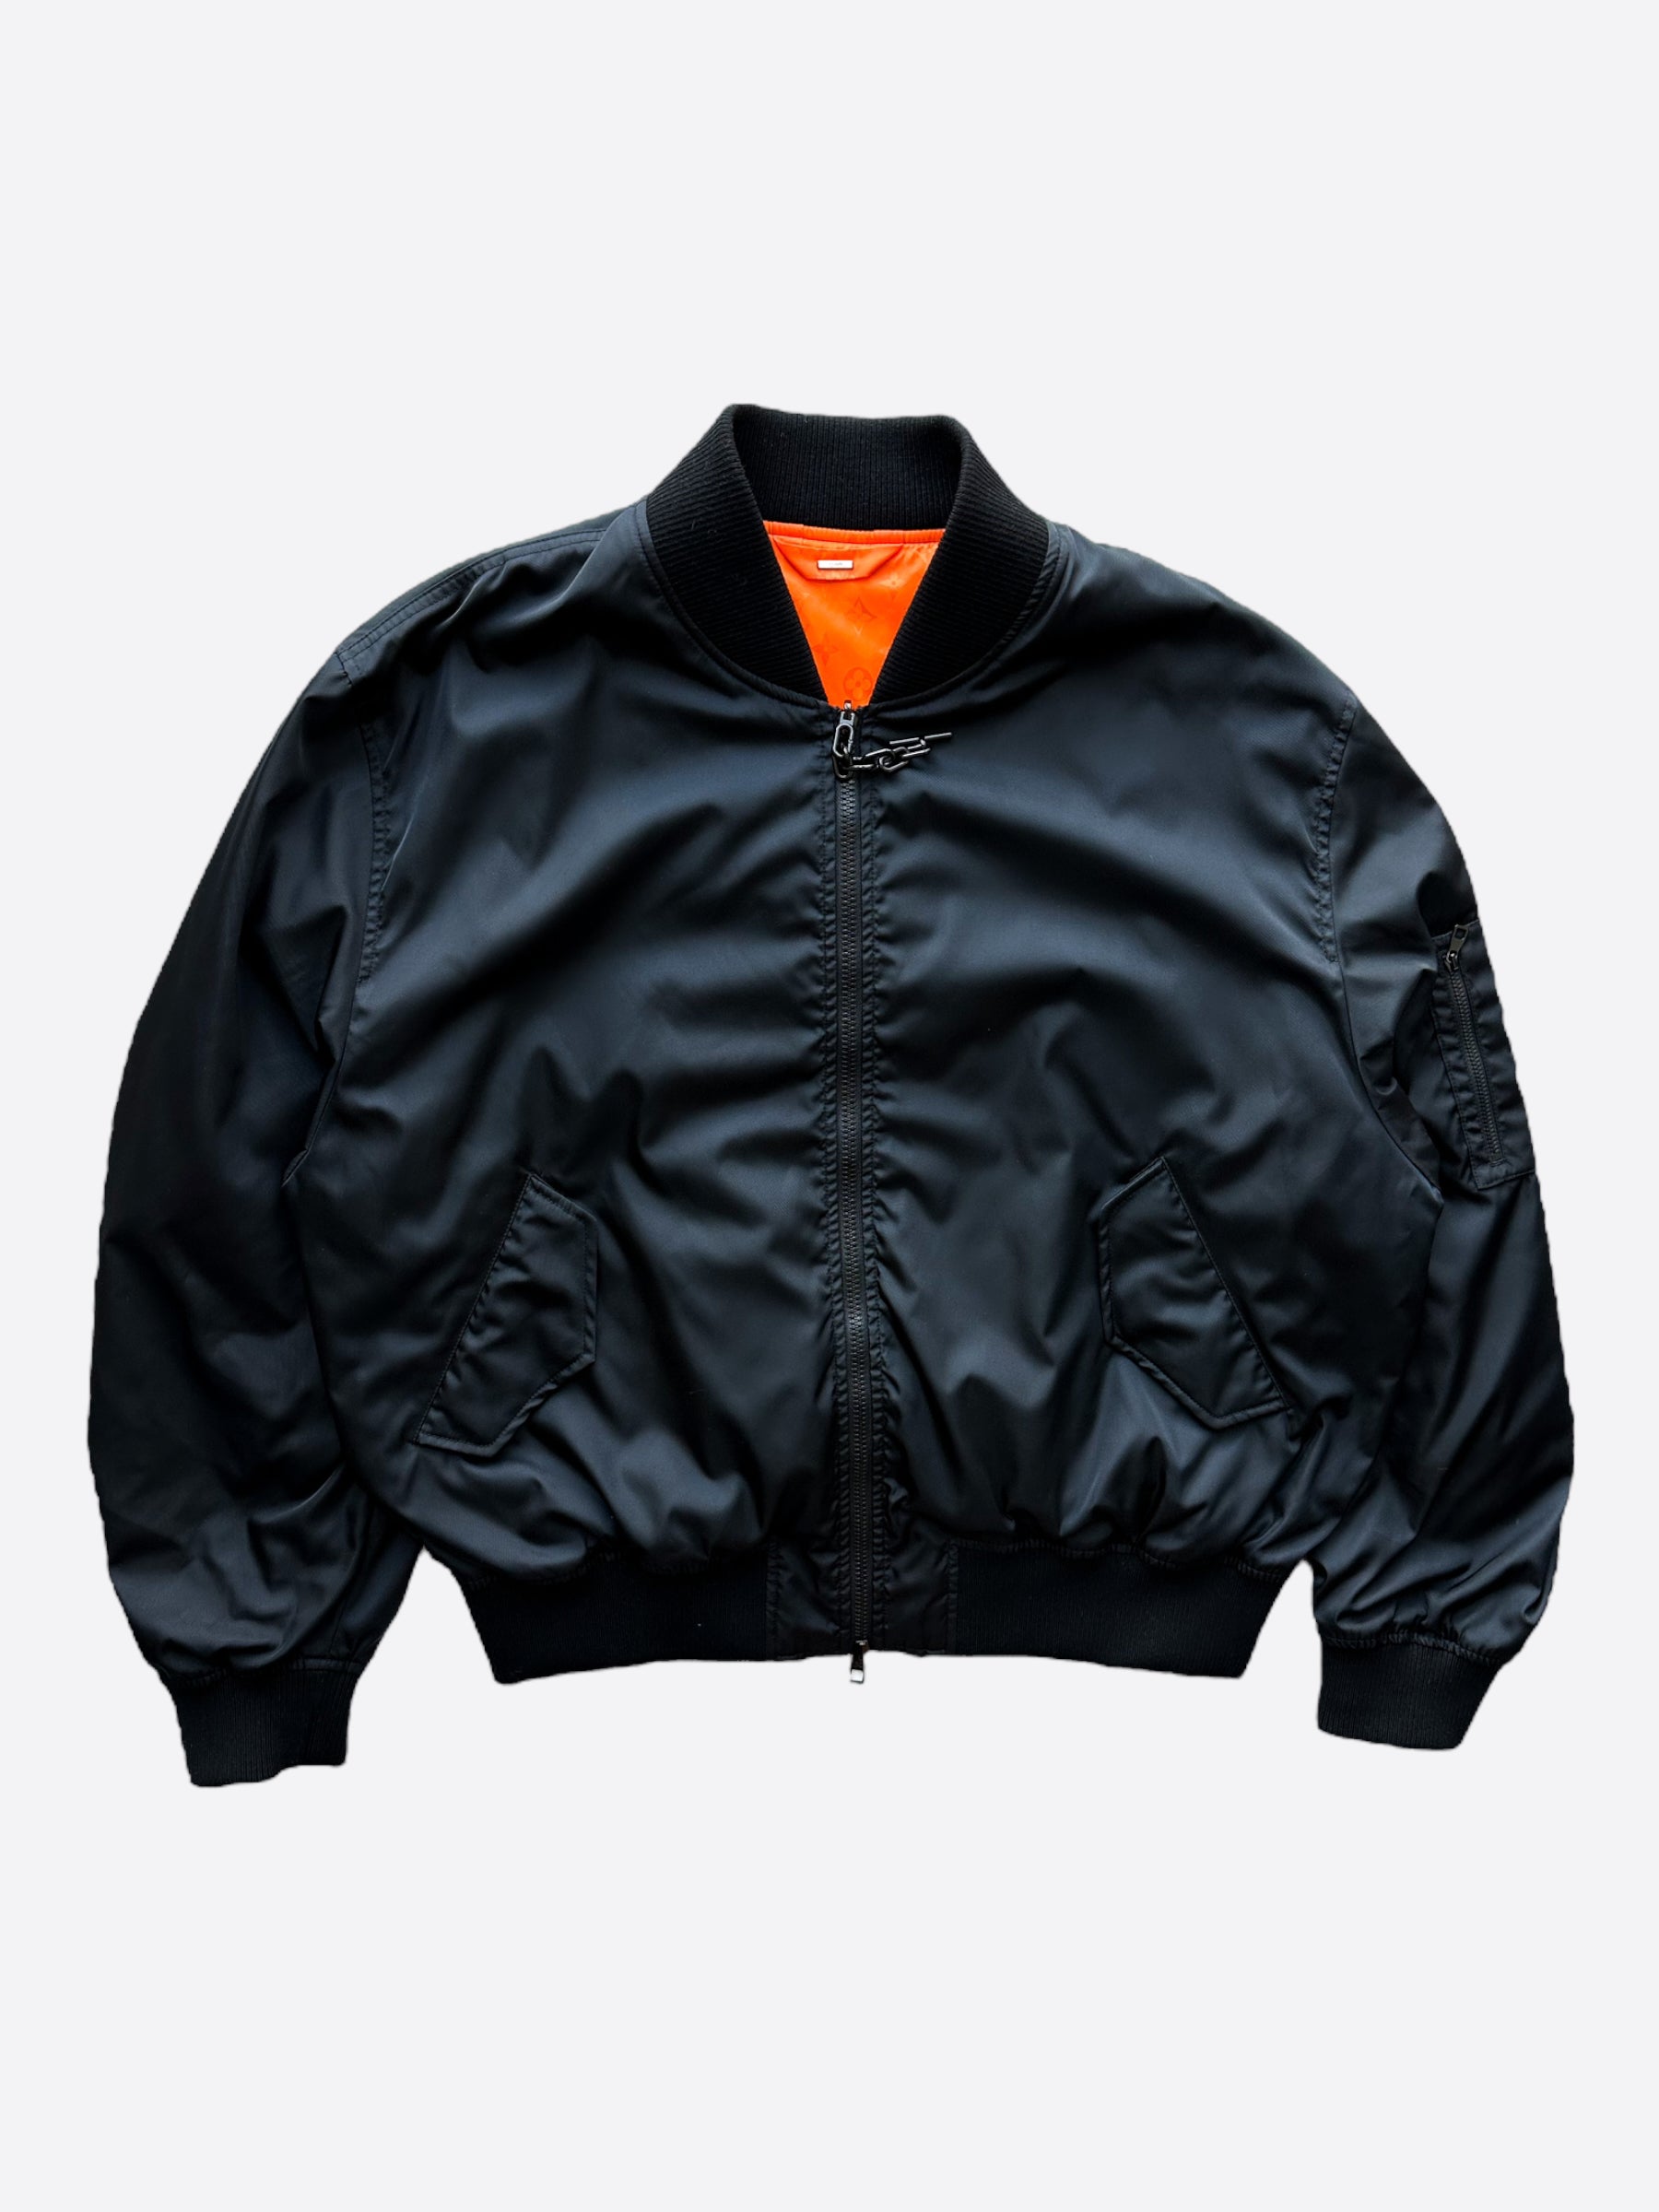 Louis Vuitton 2016 Bomber Jacket - Black Outerwear, Clothing